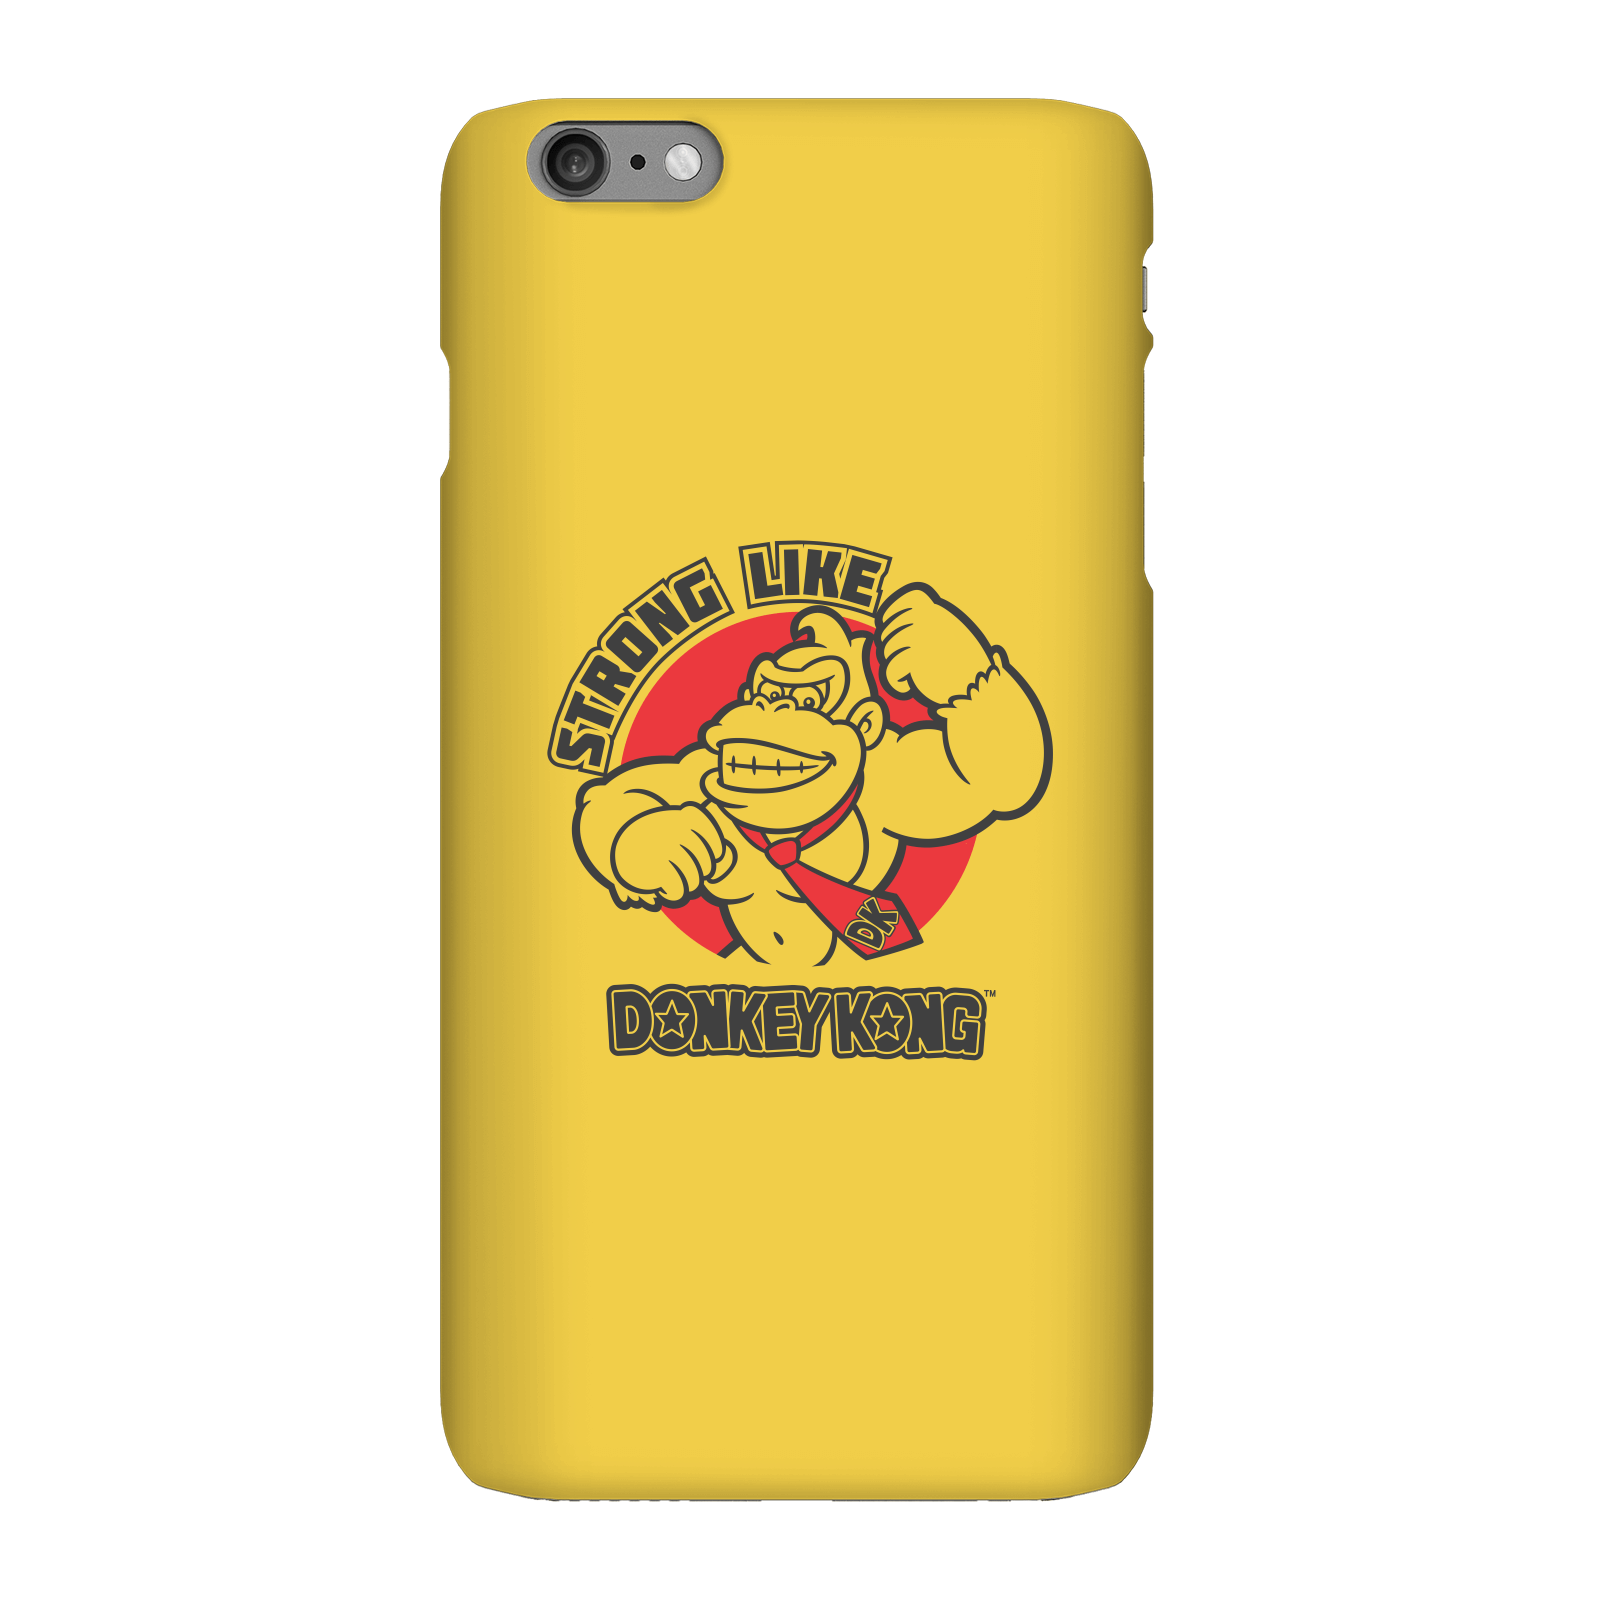 Nintendo Donkey Kong Strong Like Donkey Kong Phone Case - iPhone 6 Plus - Snap Case - Gloss